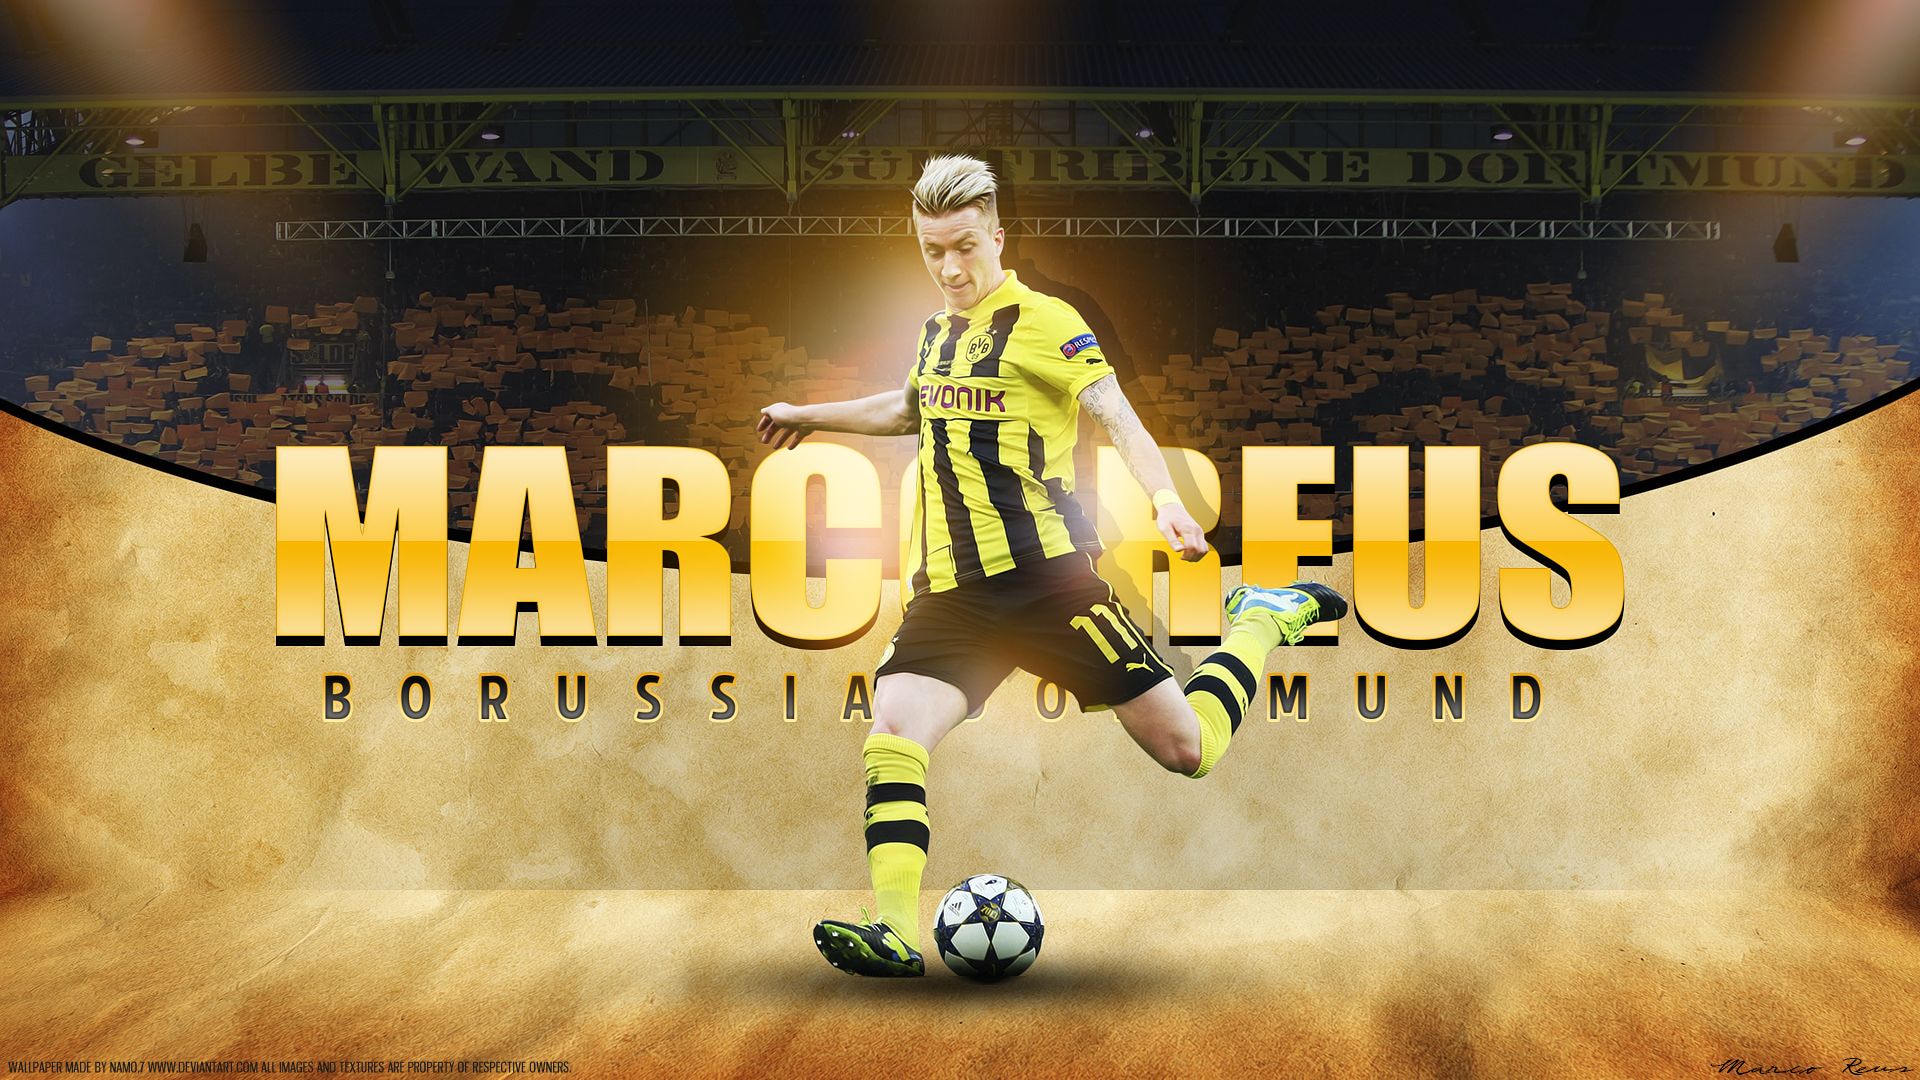 Sports Marco Reus HD Wallpaper | Background Image